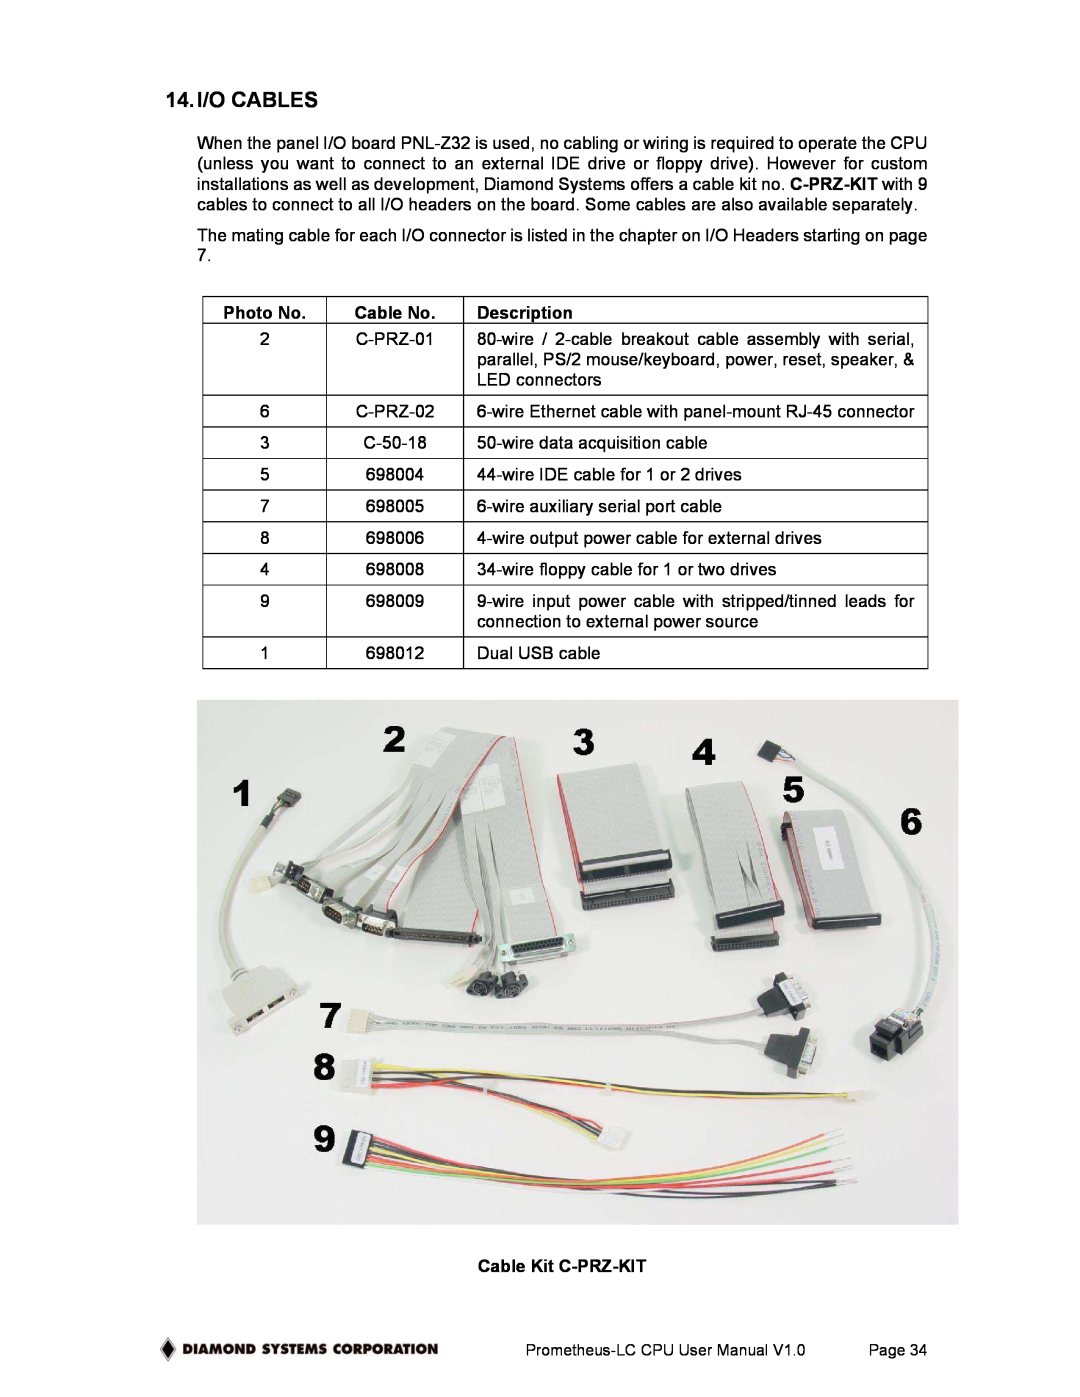 Diamond Systems PR-Z16-LC-ST user manual 14.I/O CABLES, Photo No, Cable No, Cable Kit C-PRZ-KIT, Description 